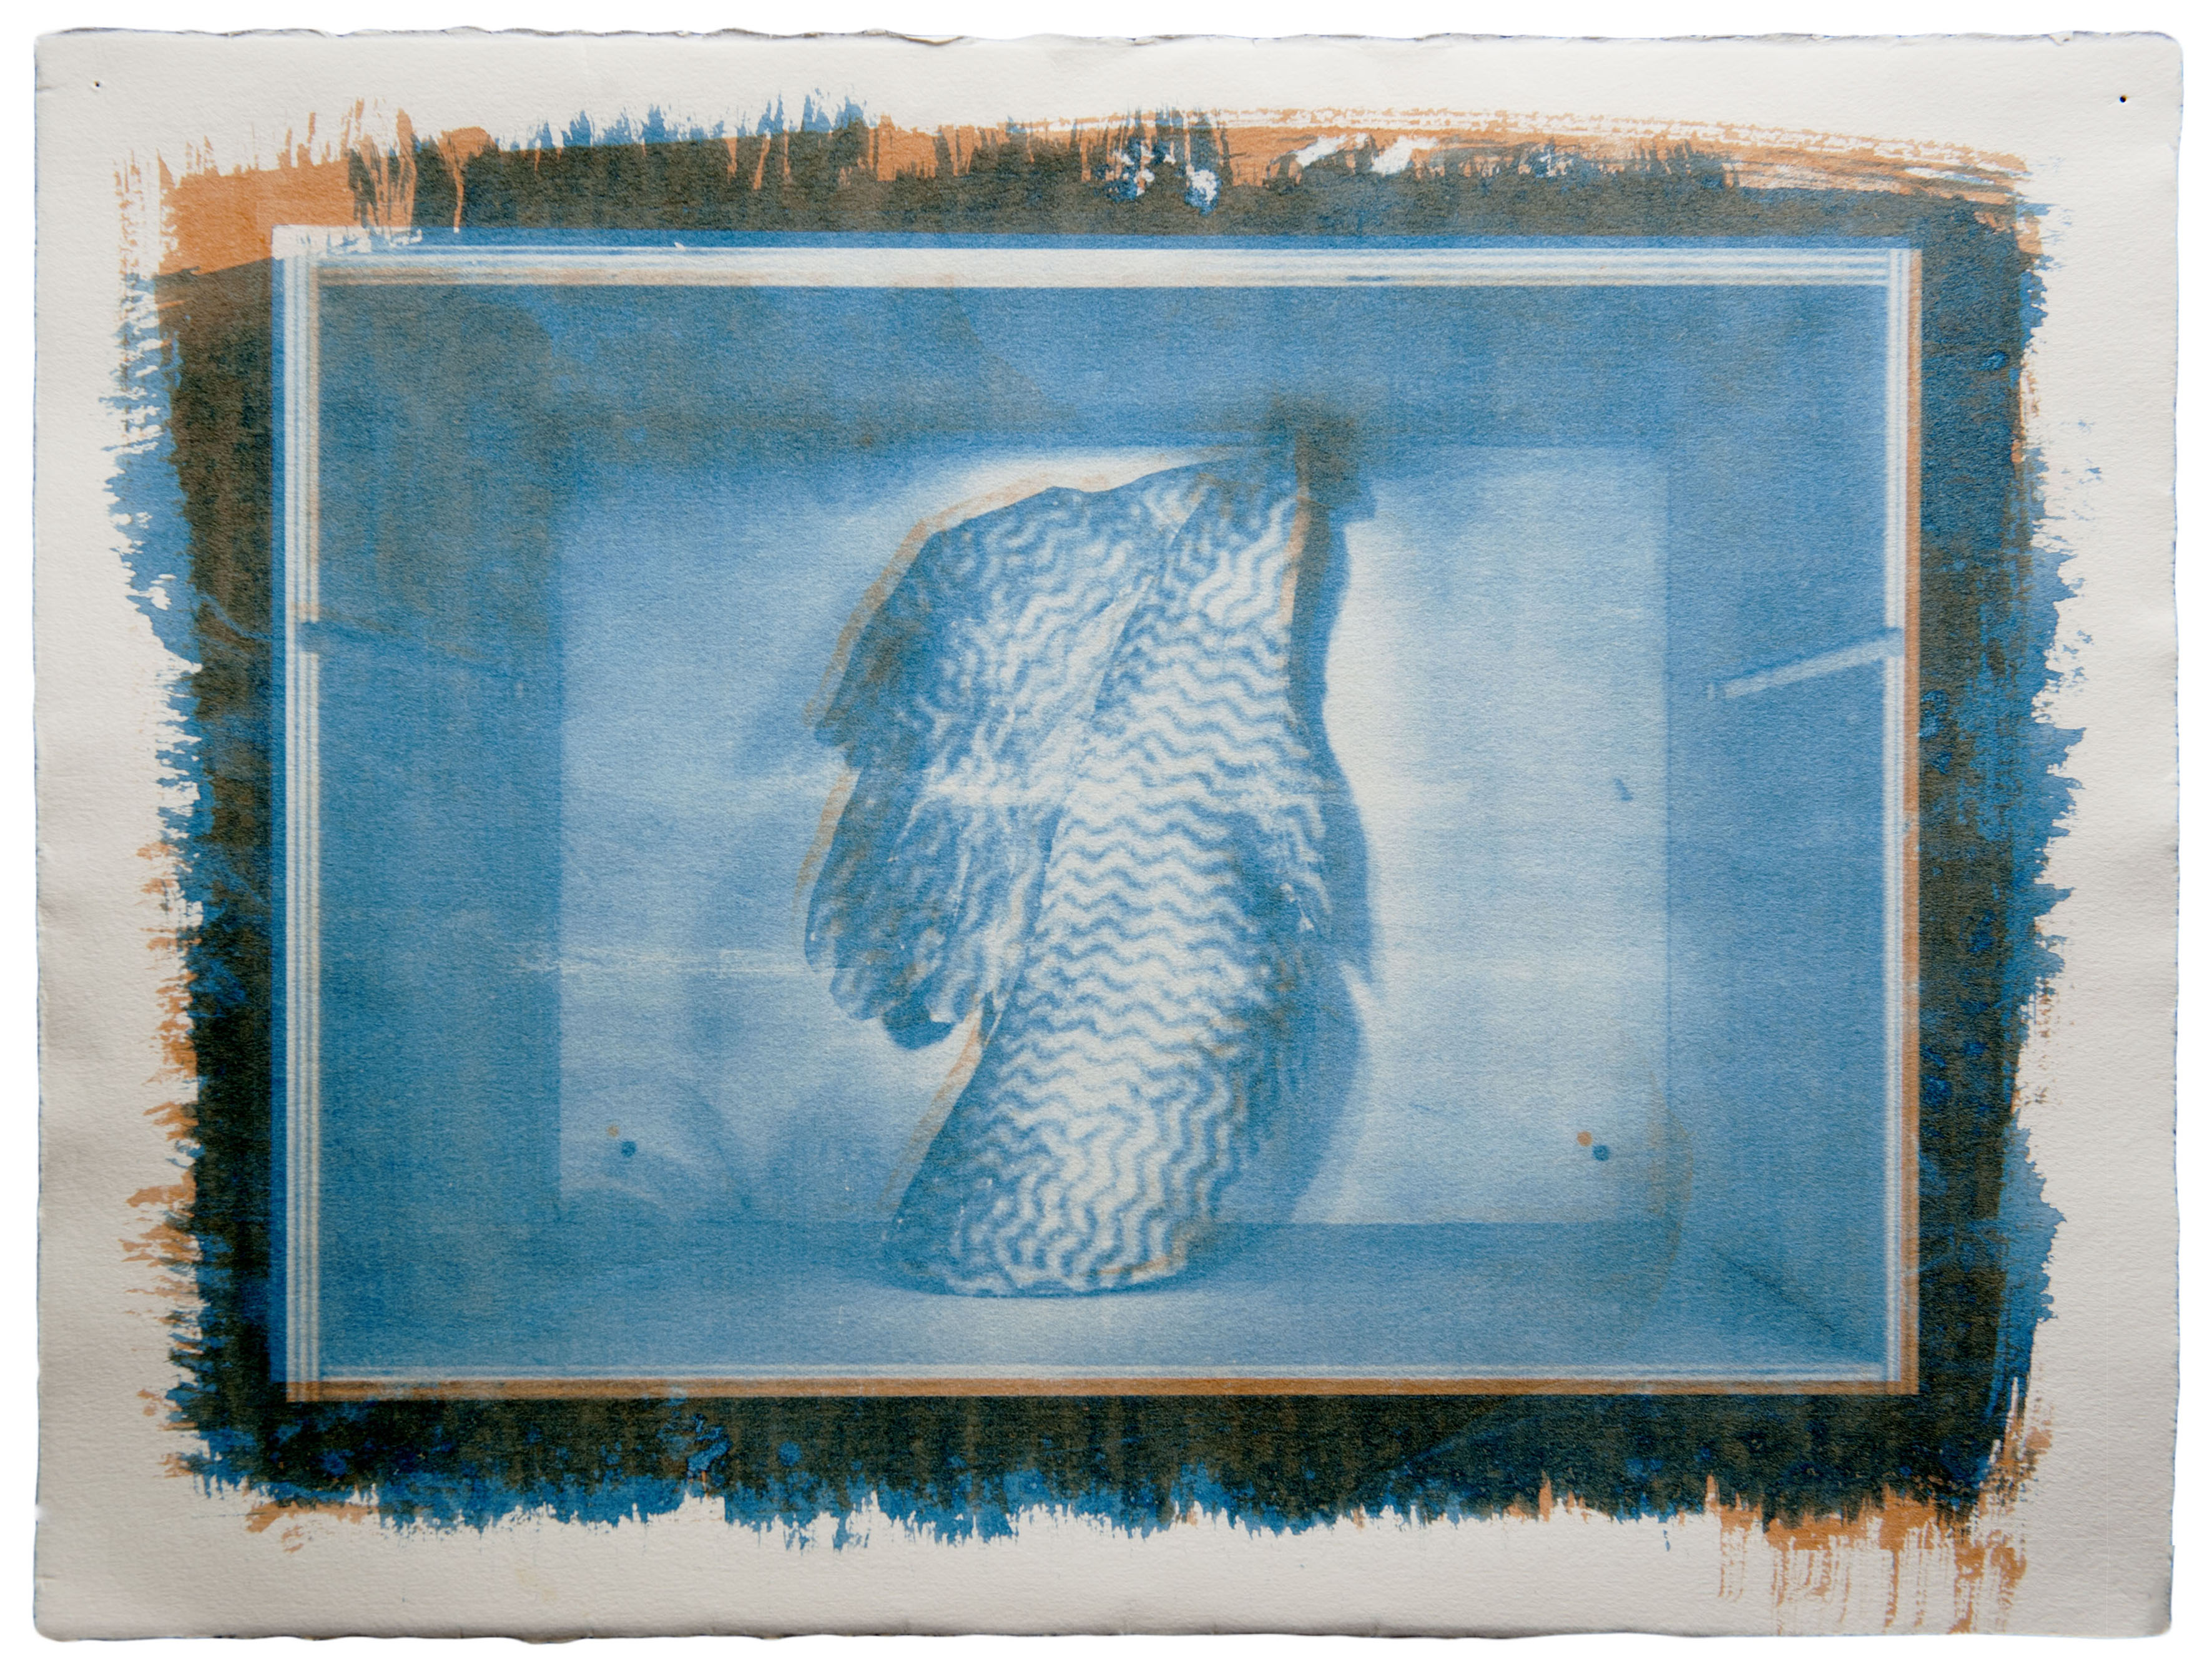 Soyoun Kim, 'Cabinet of curiosities of identity', 2011, Gum bichromate print, 28 x 38cm. Image courtesy the artist.